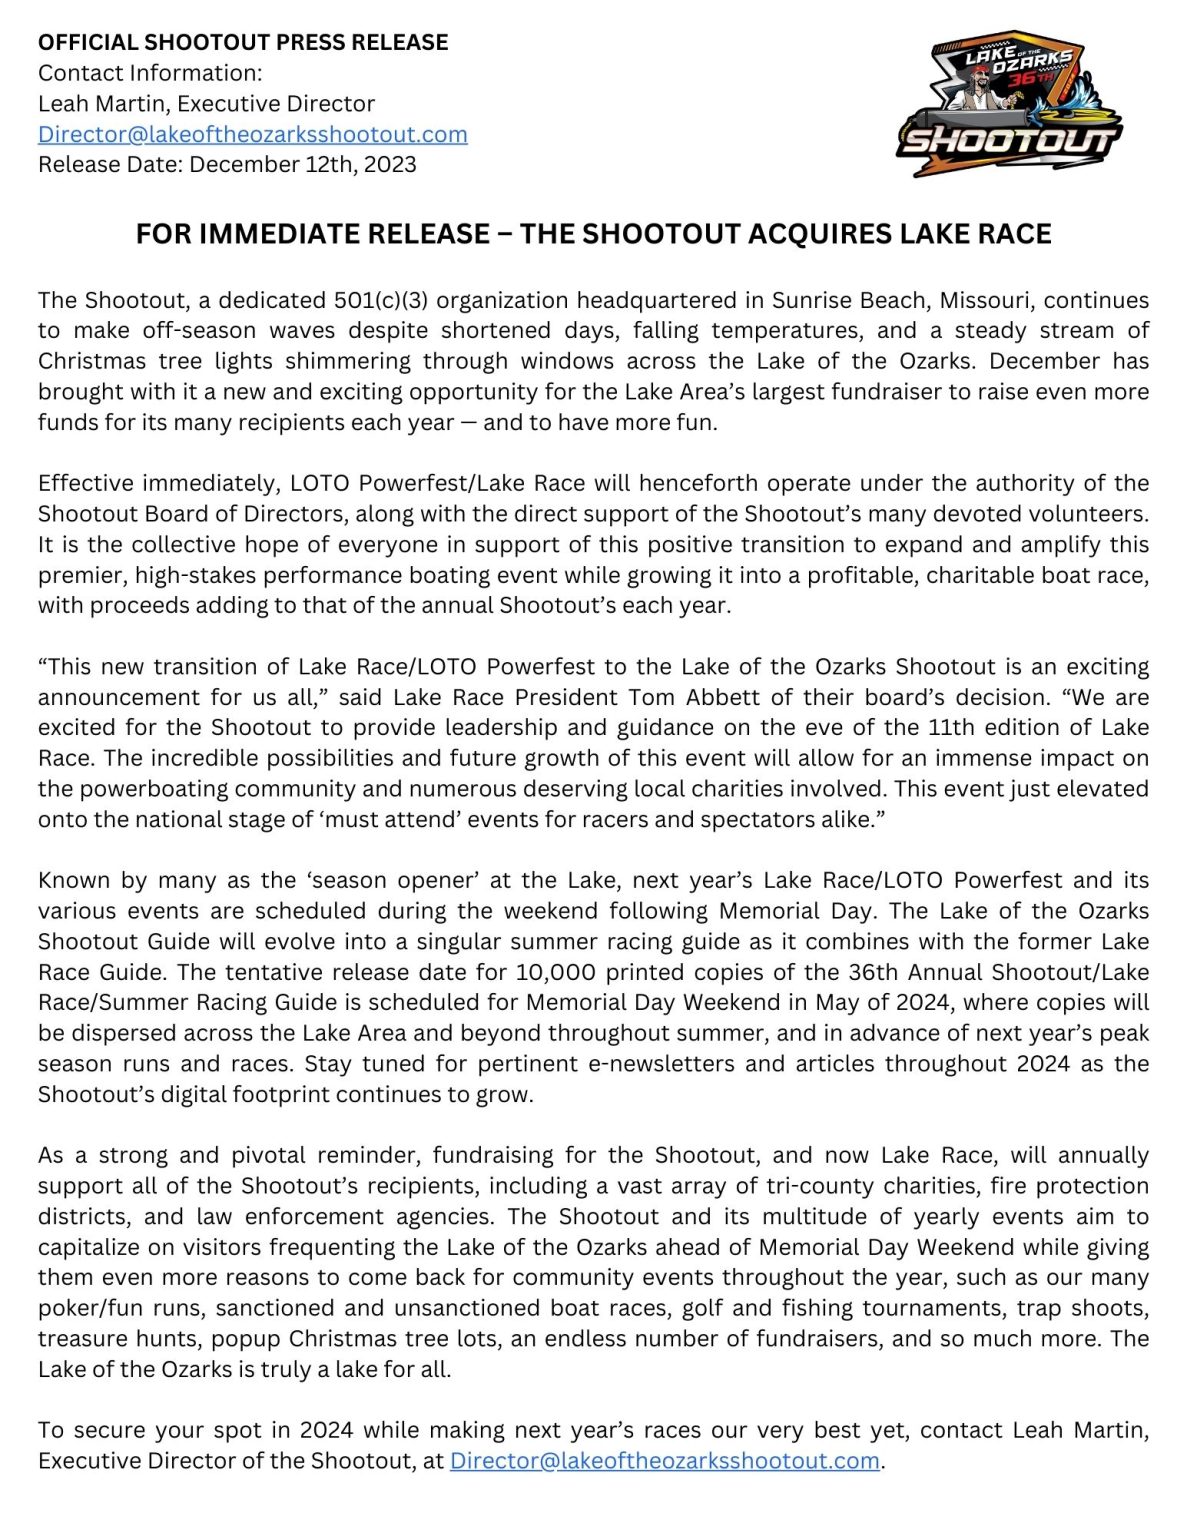 Lake Of The Ozarks Shootout Announces Takeover Of LOTO Powerfest/Lake